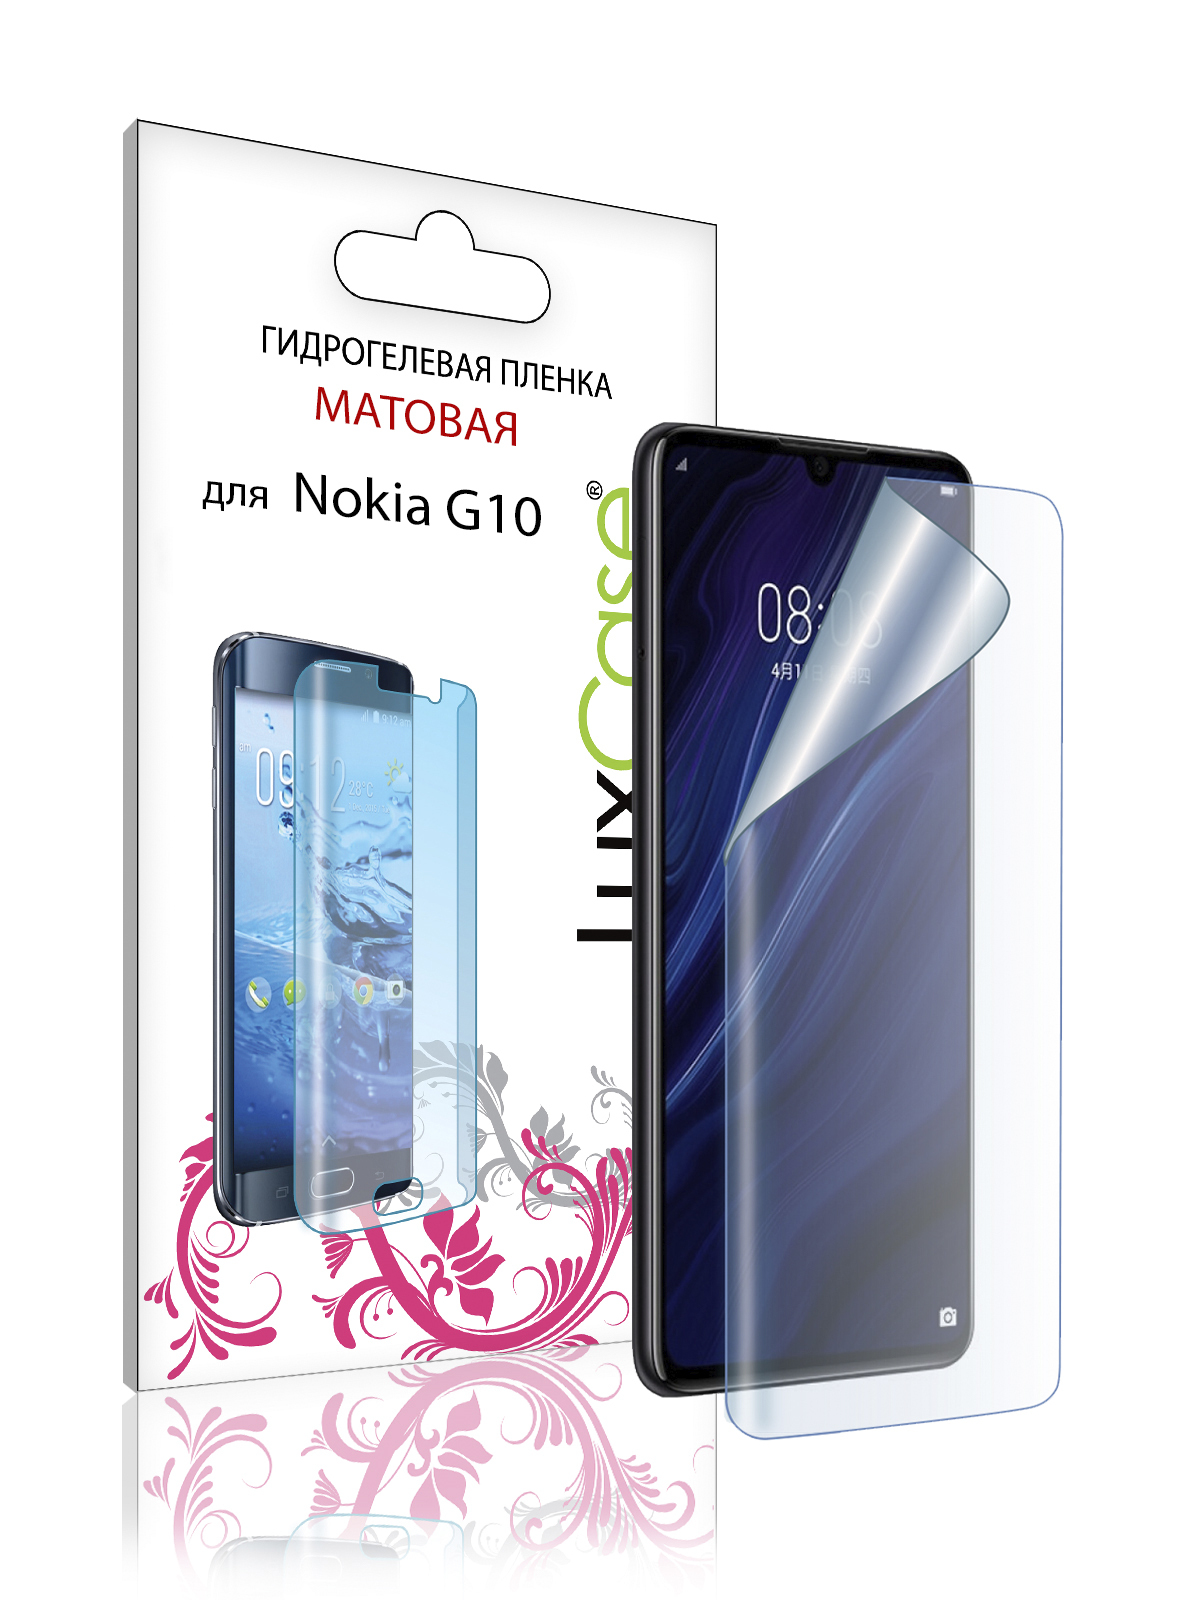 Пленка гидрогелевая LuxCase для Nokia G10 0.14mm Front Matte 86453 гидрогелевая пленка luxcase для nokia g10 back transparent 86390